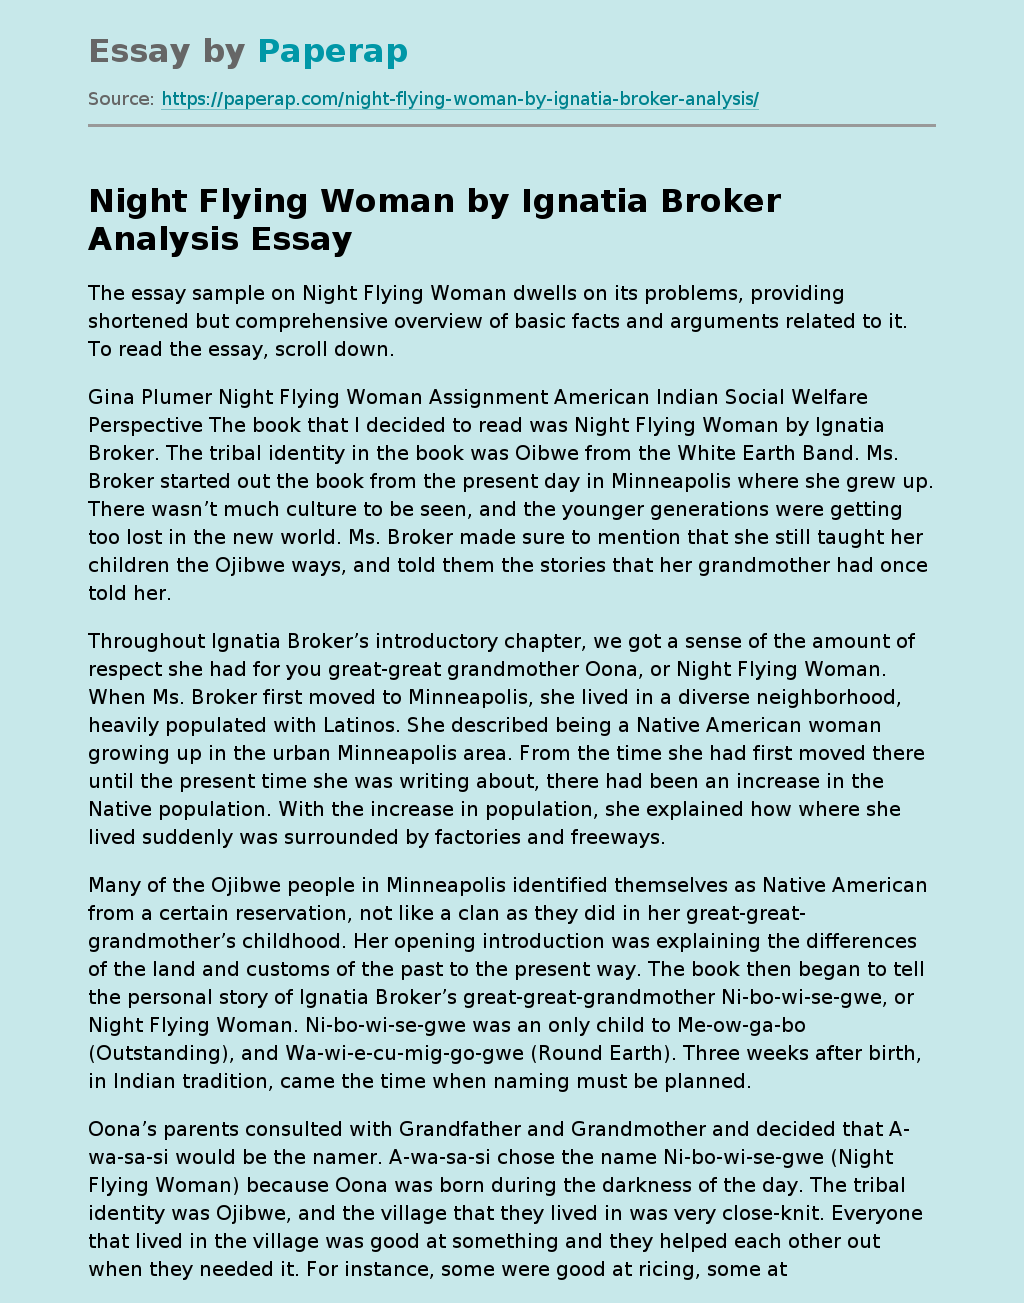 Night Flying Woman by Ignatia Broker Analysis